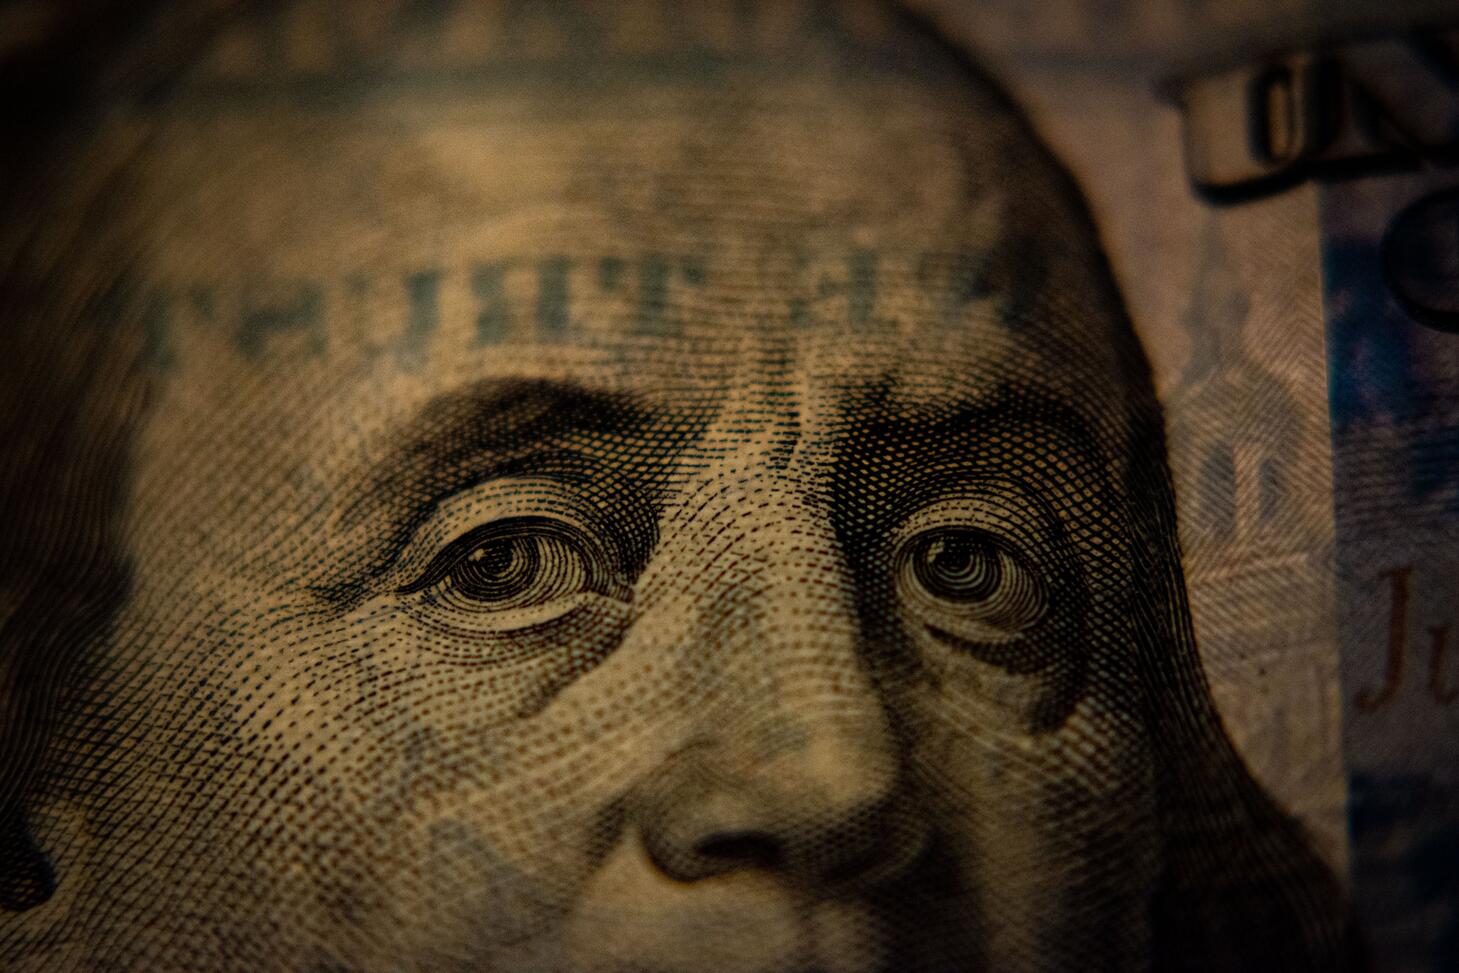 A closeup of a US hundred dollar bill (Benjamin Franklin side). Photo by Adam Nir on Unsplash.